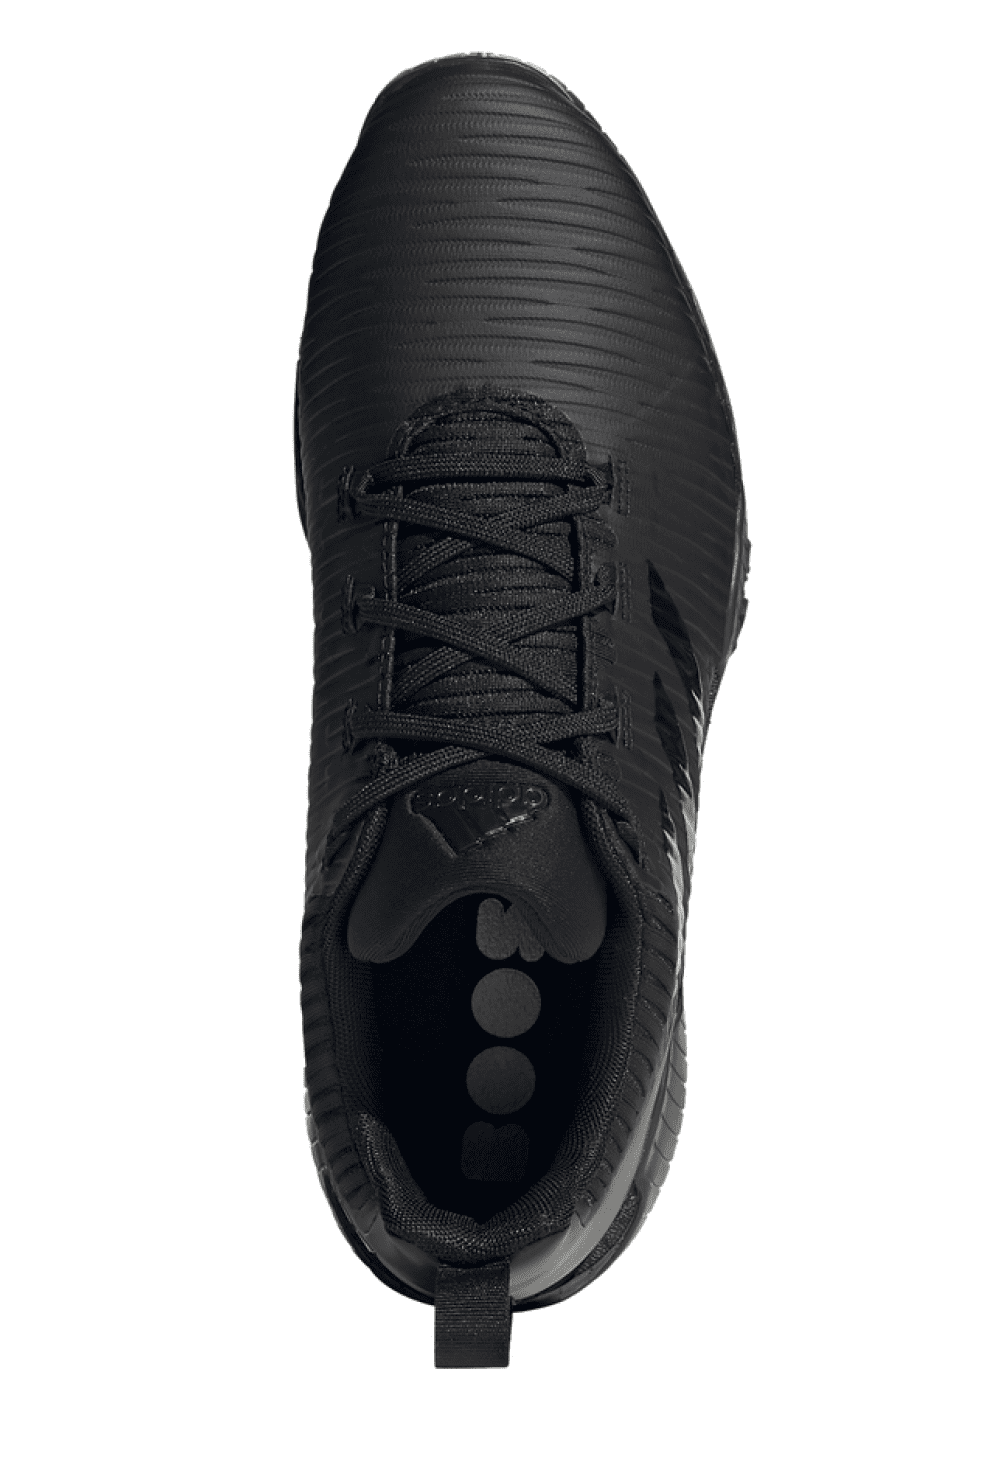 adidas CodeChaos Golf Shoes FW4993